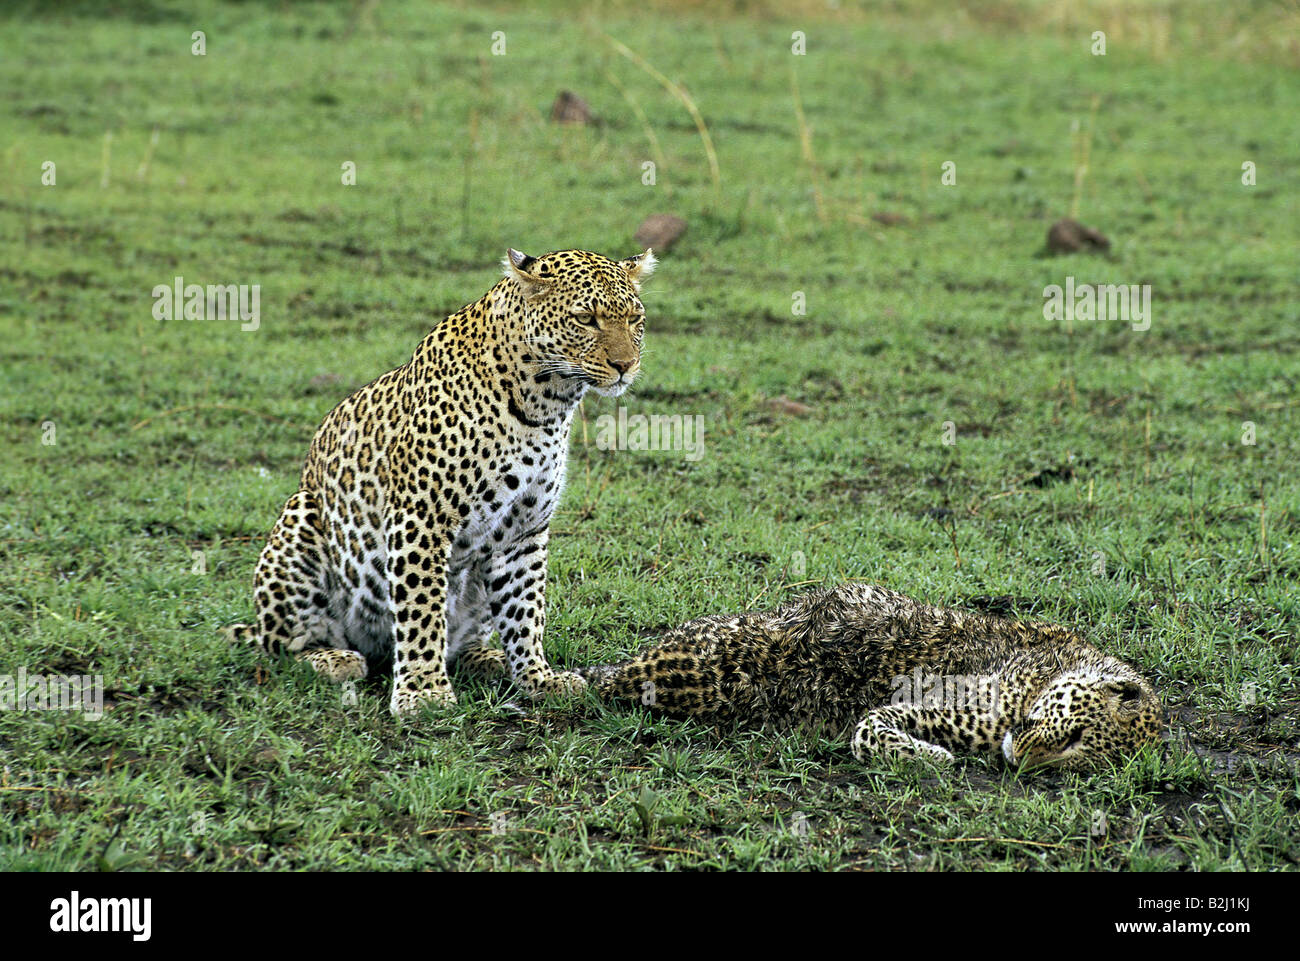 Zoologie / Tiere, Säugetier / Säugetier, Leopard (Panthera Pardus), weibliche Leoparden mit Toten Cub, Masai Mara, Kenia, Vertrieb Stockfoto